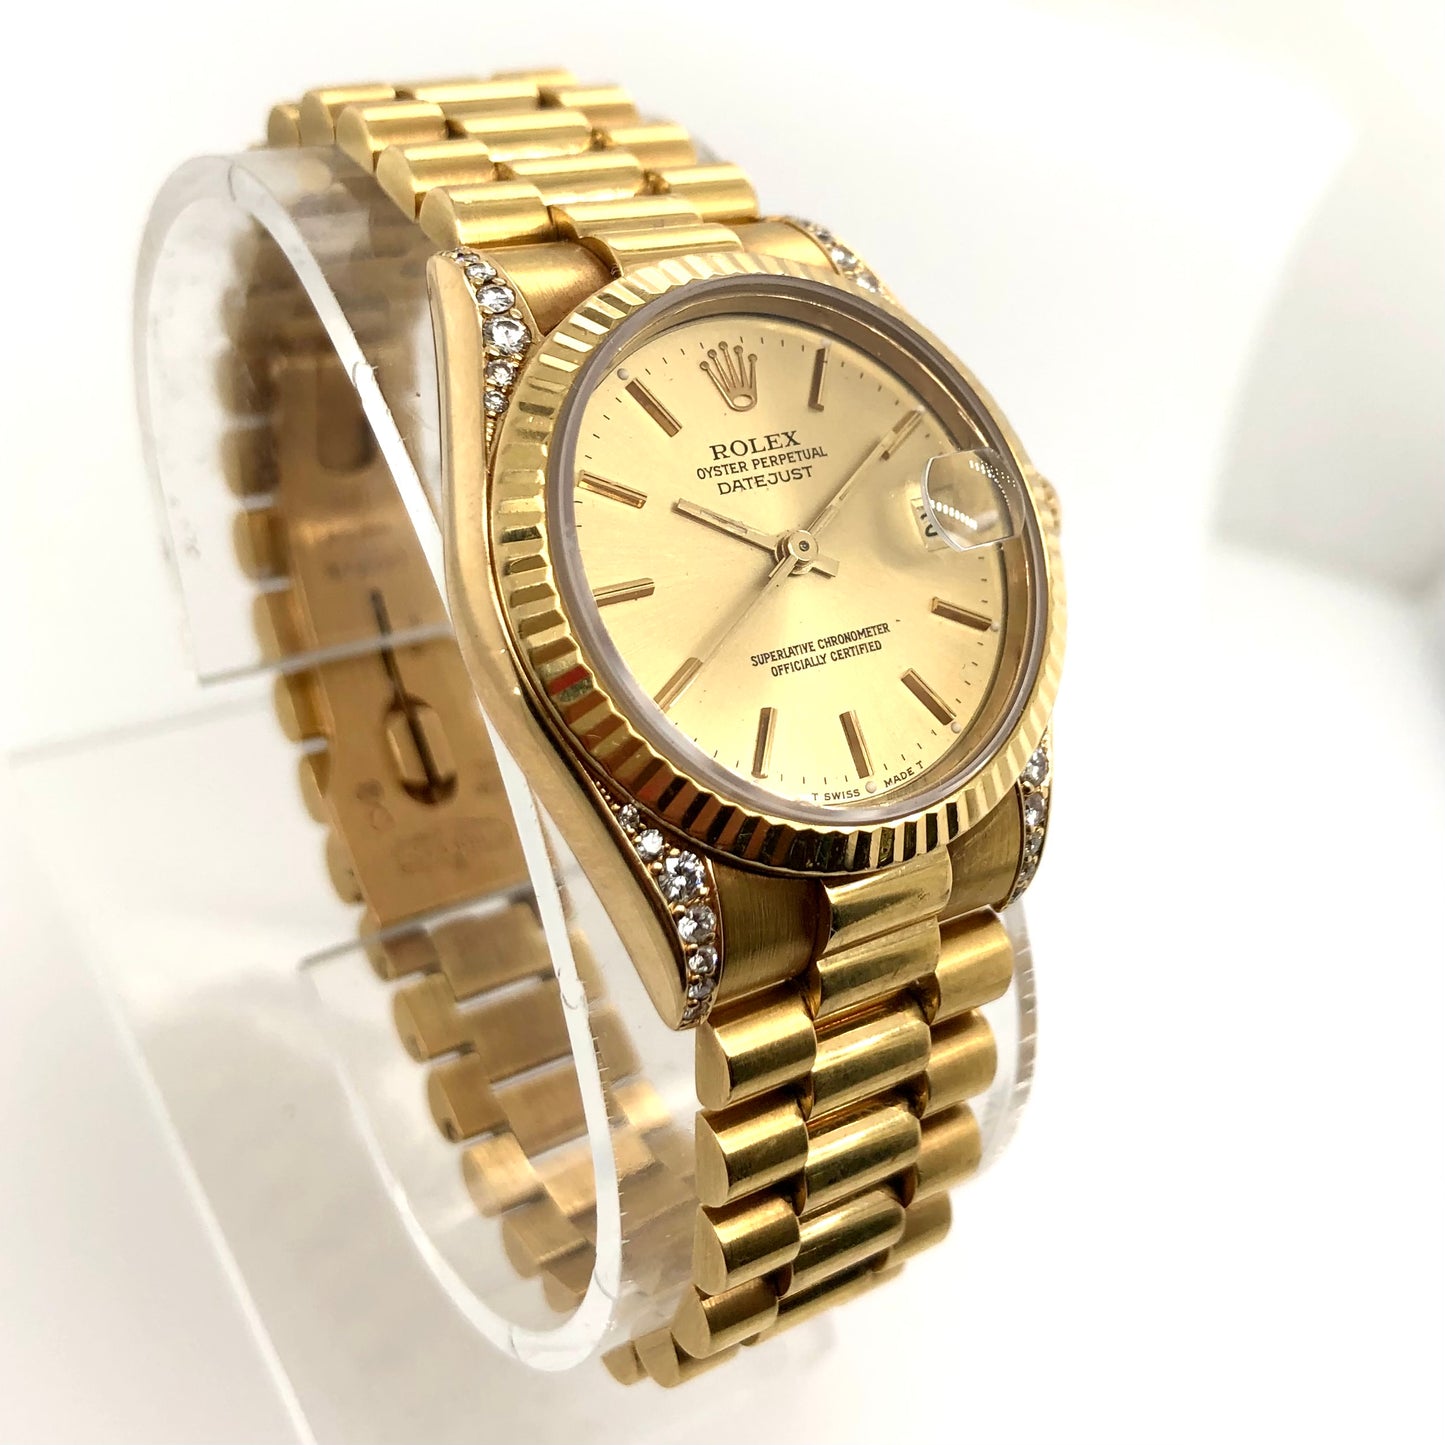 ROLEX PRESIDENTIAL 31mm 18K Yellow Gold Watch FACTORY DIAMONDS